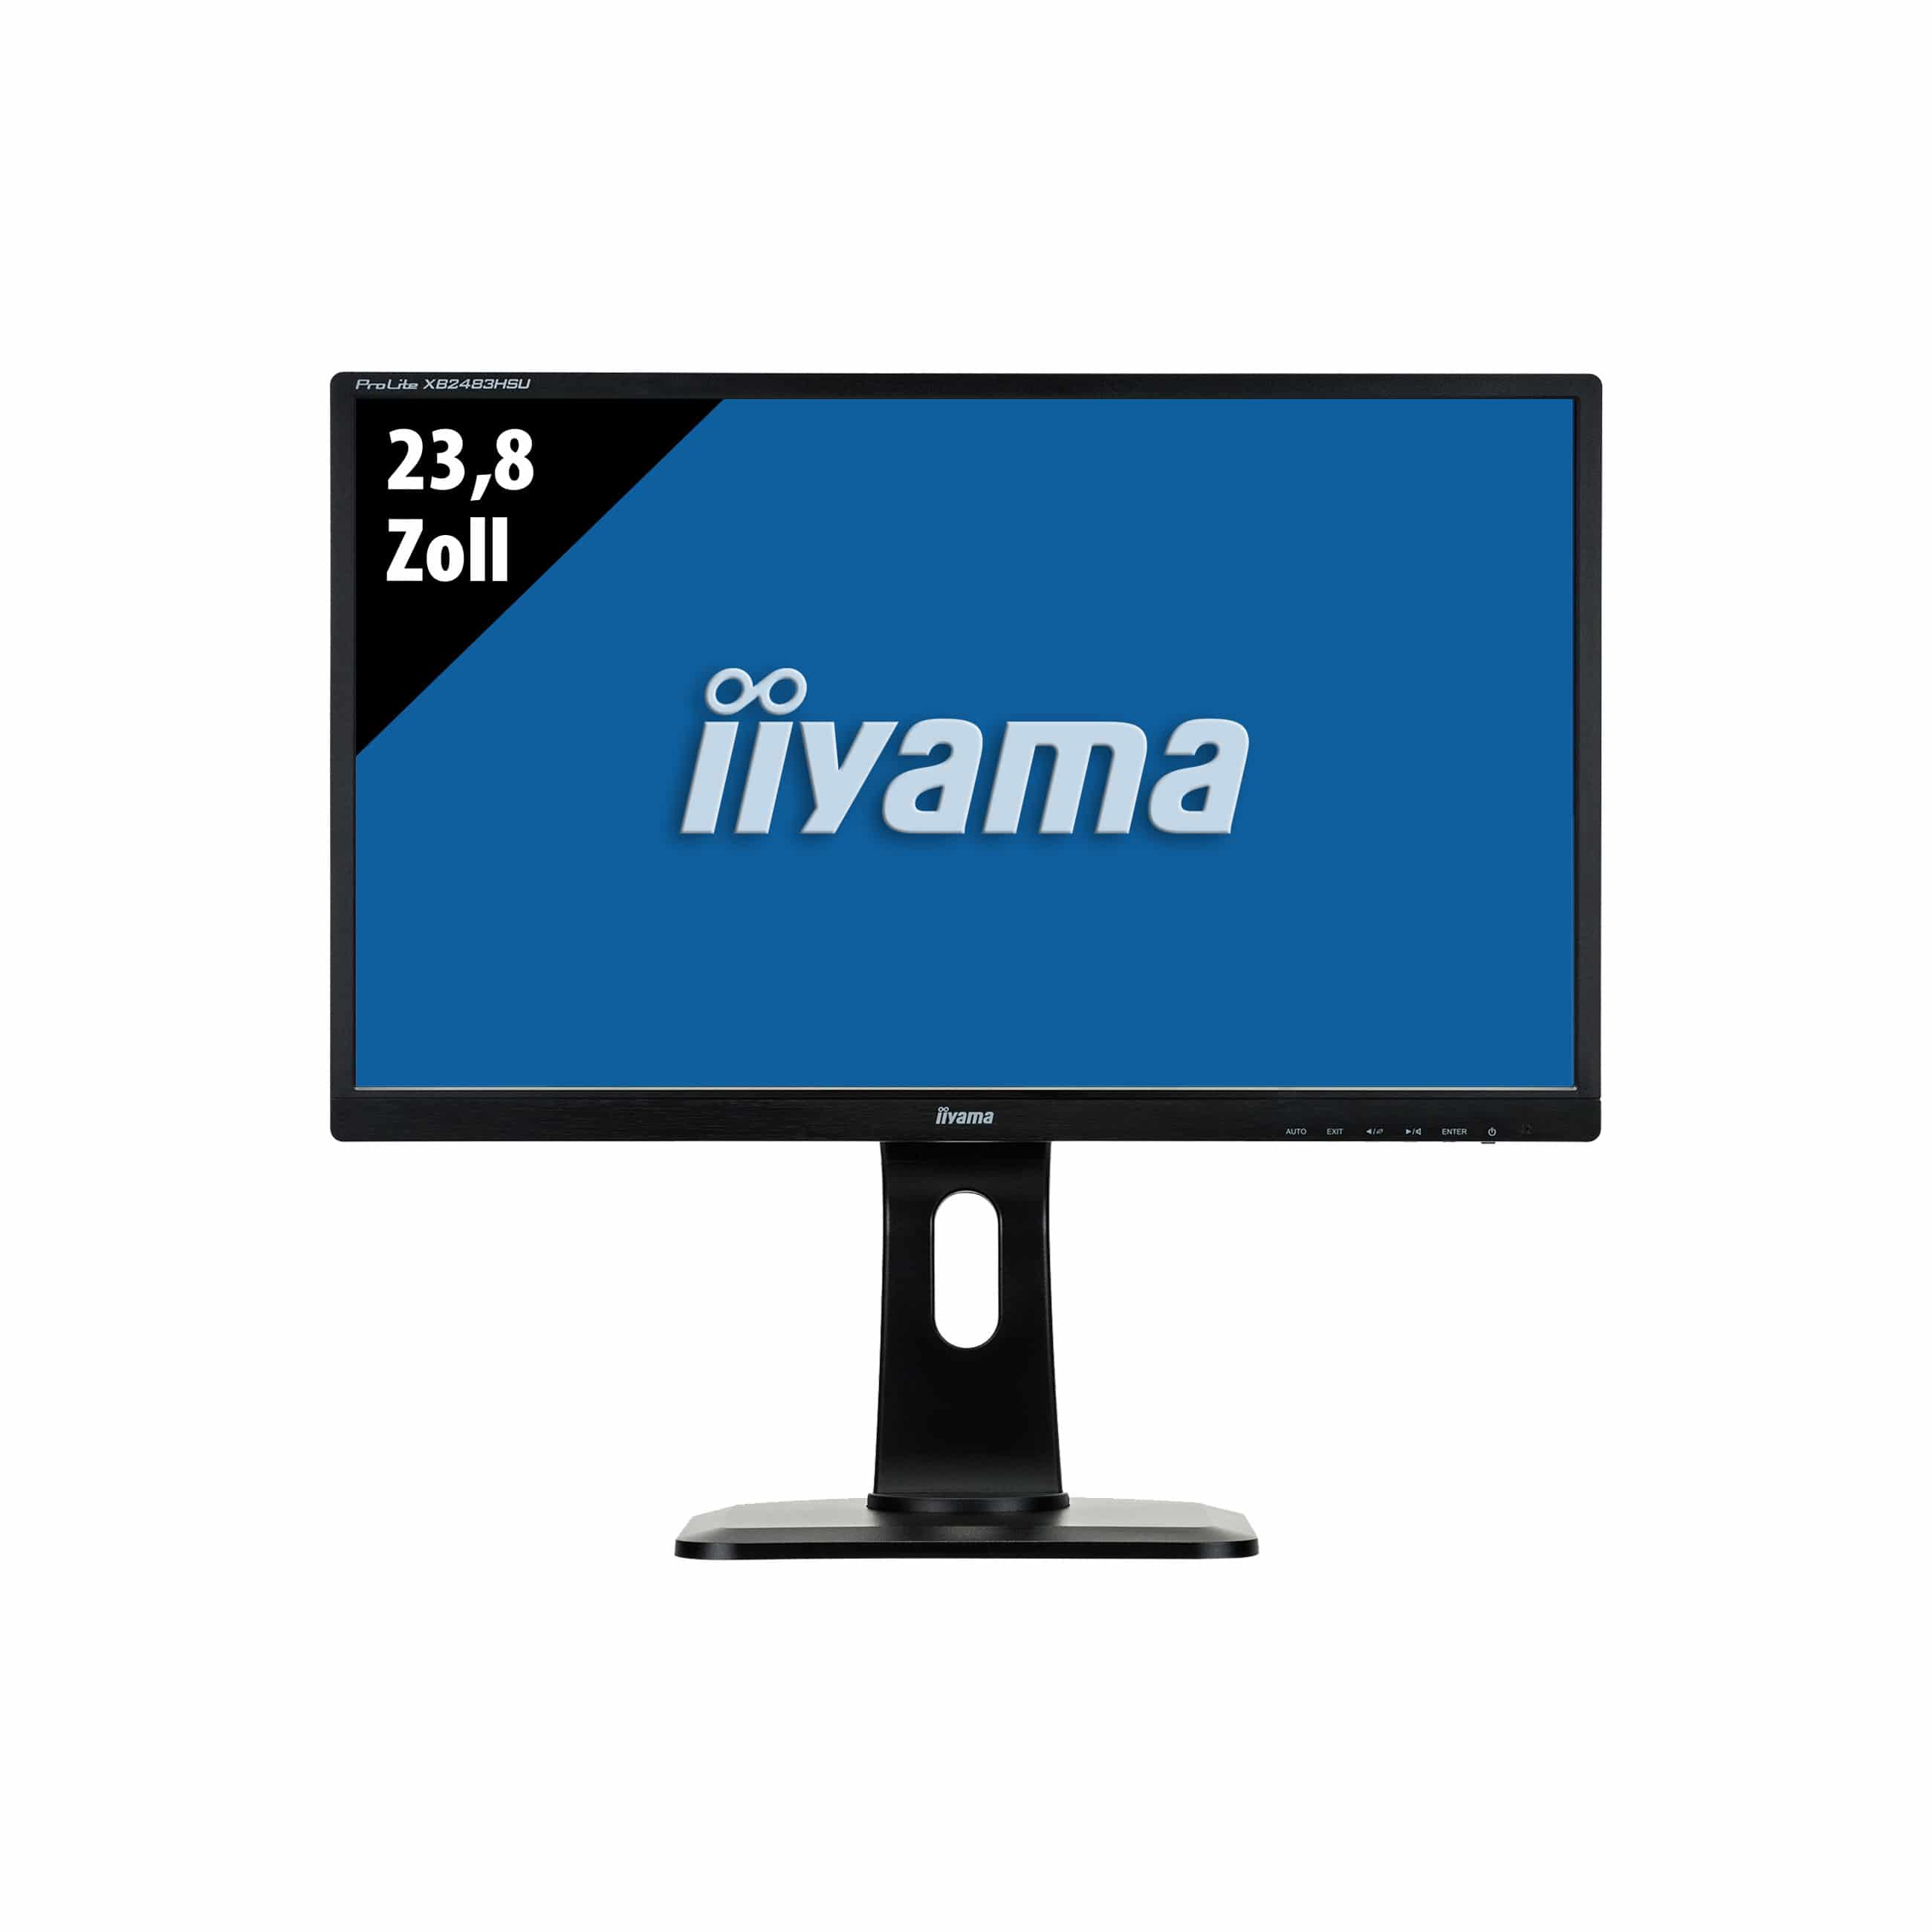 Iiyama ProLite XB2483HSU-B2 - 1920 x 1080 - FHD